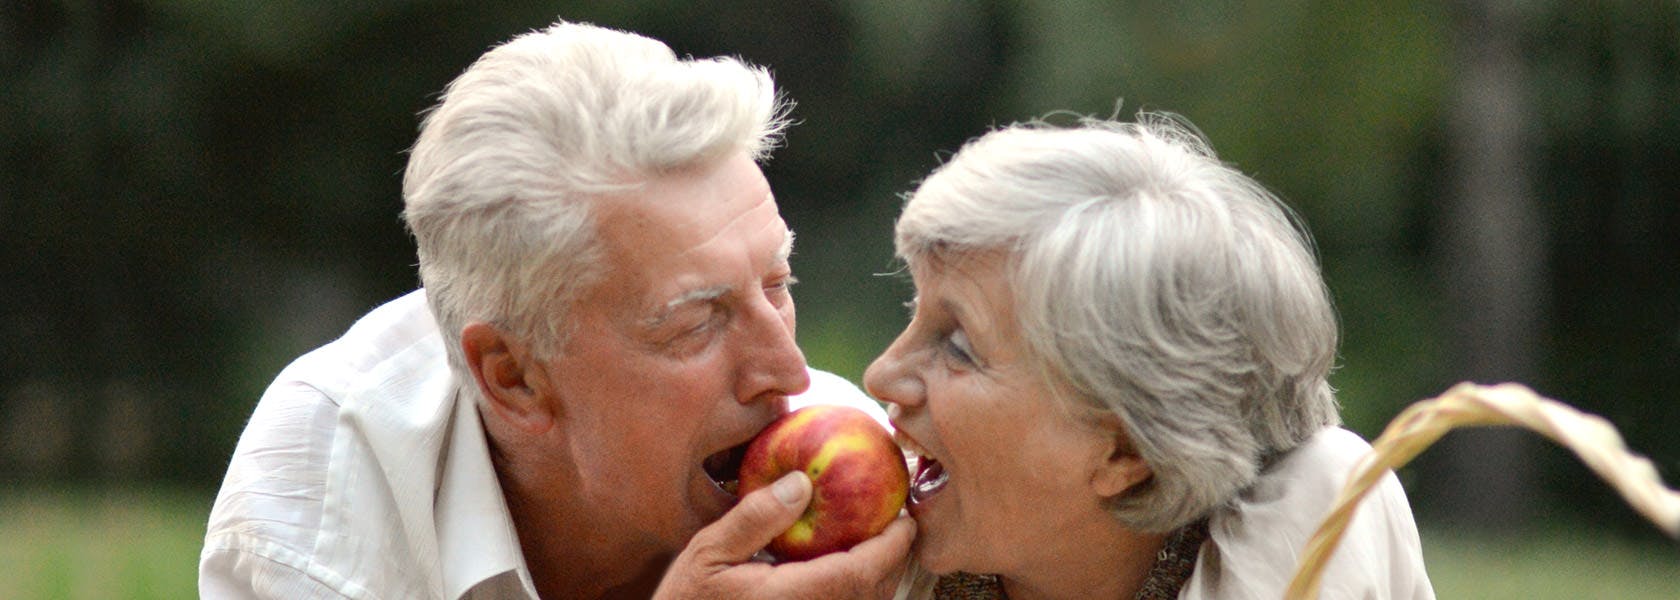 Eating Apple